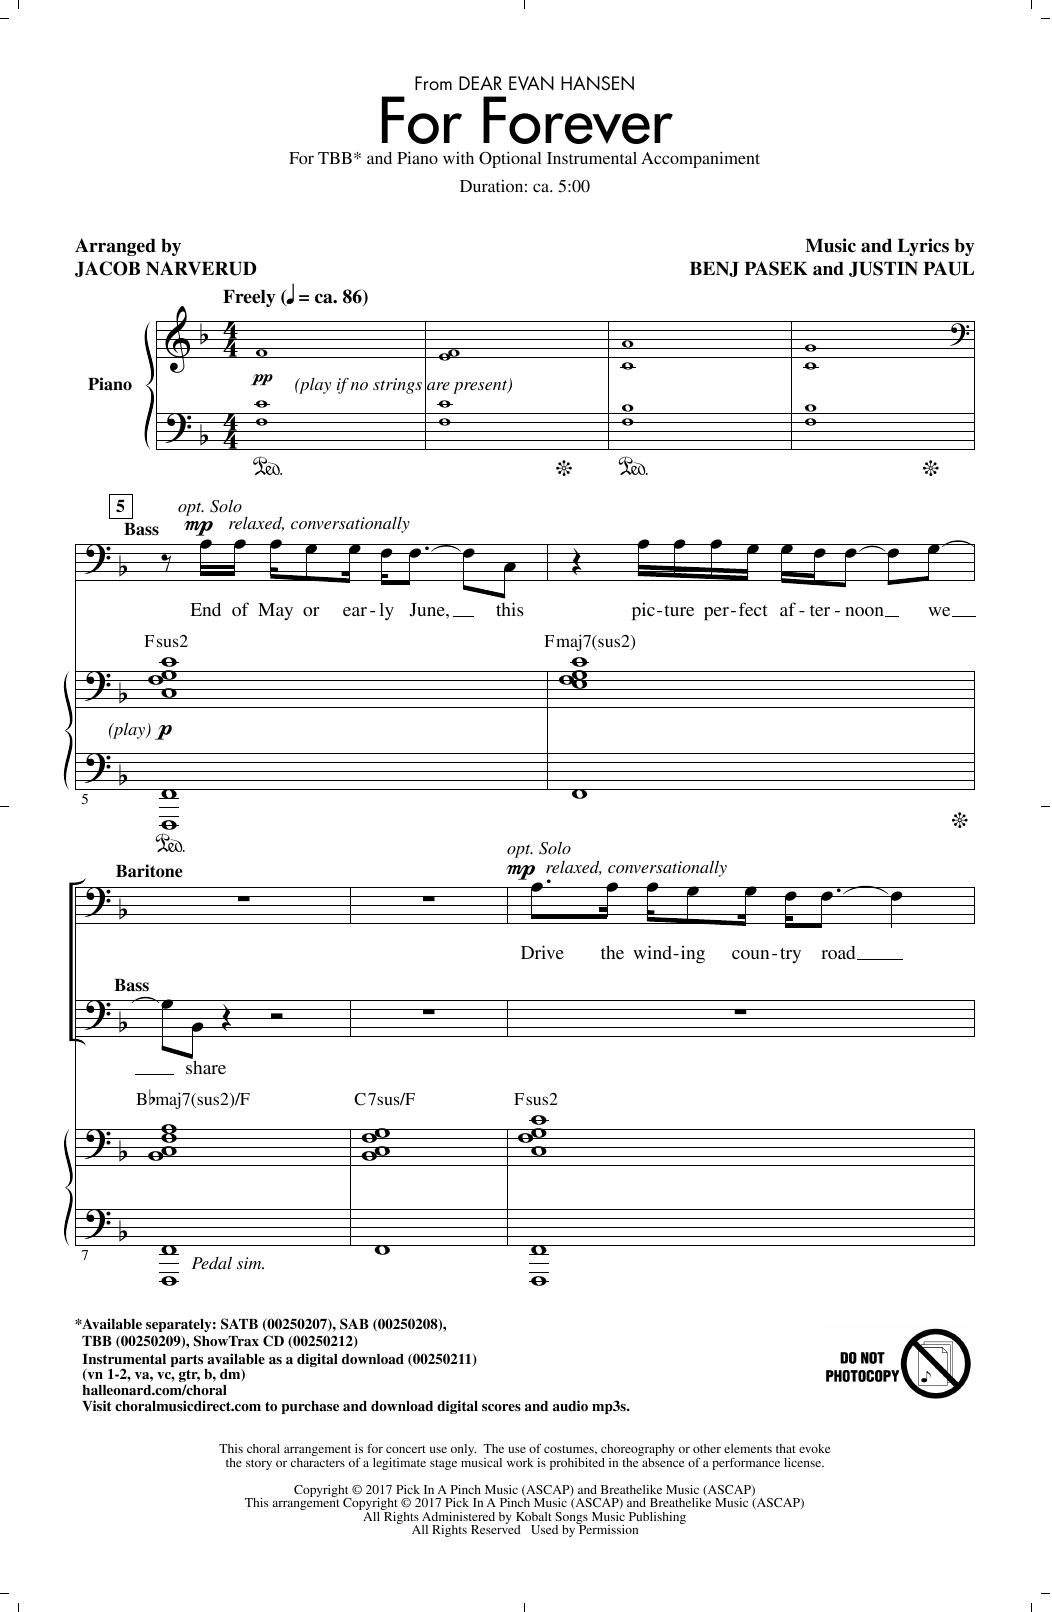 Pasek & Paul For Forever (from Dear Evan Hansen) (arr. Jacob Narverud) Sheet Music Notes & Chords for TBB - Download or Print PDF